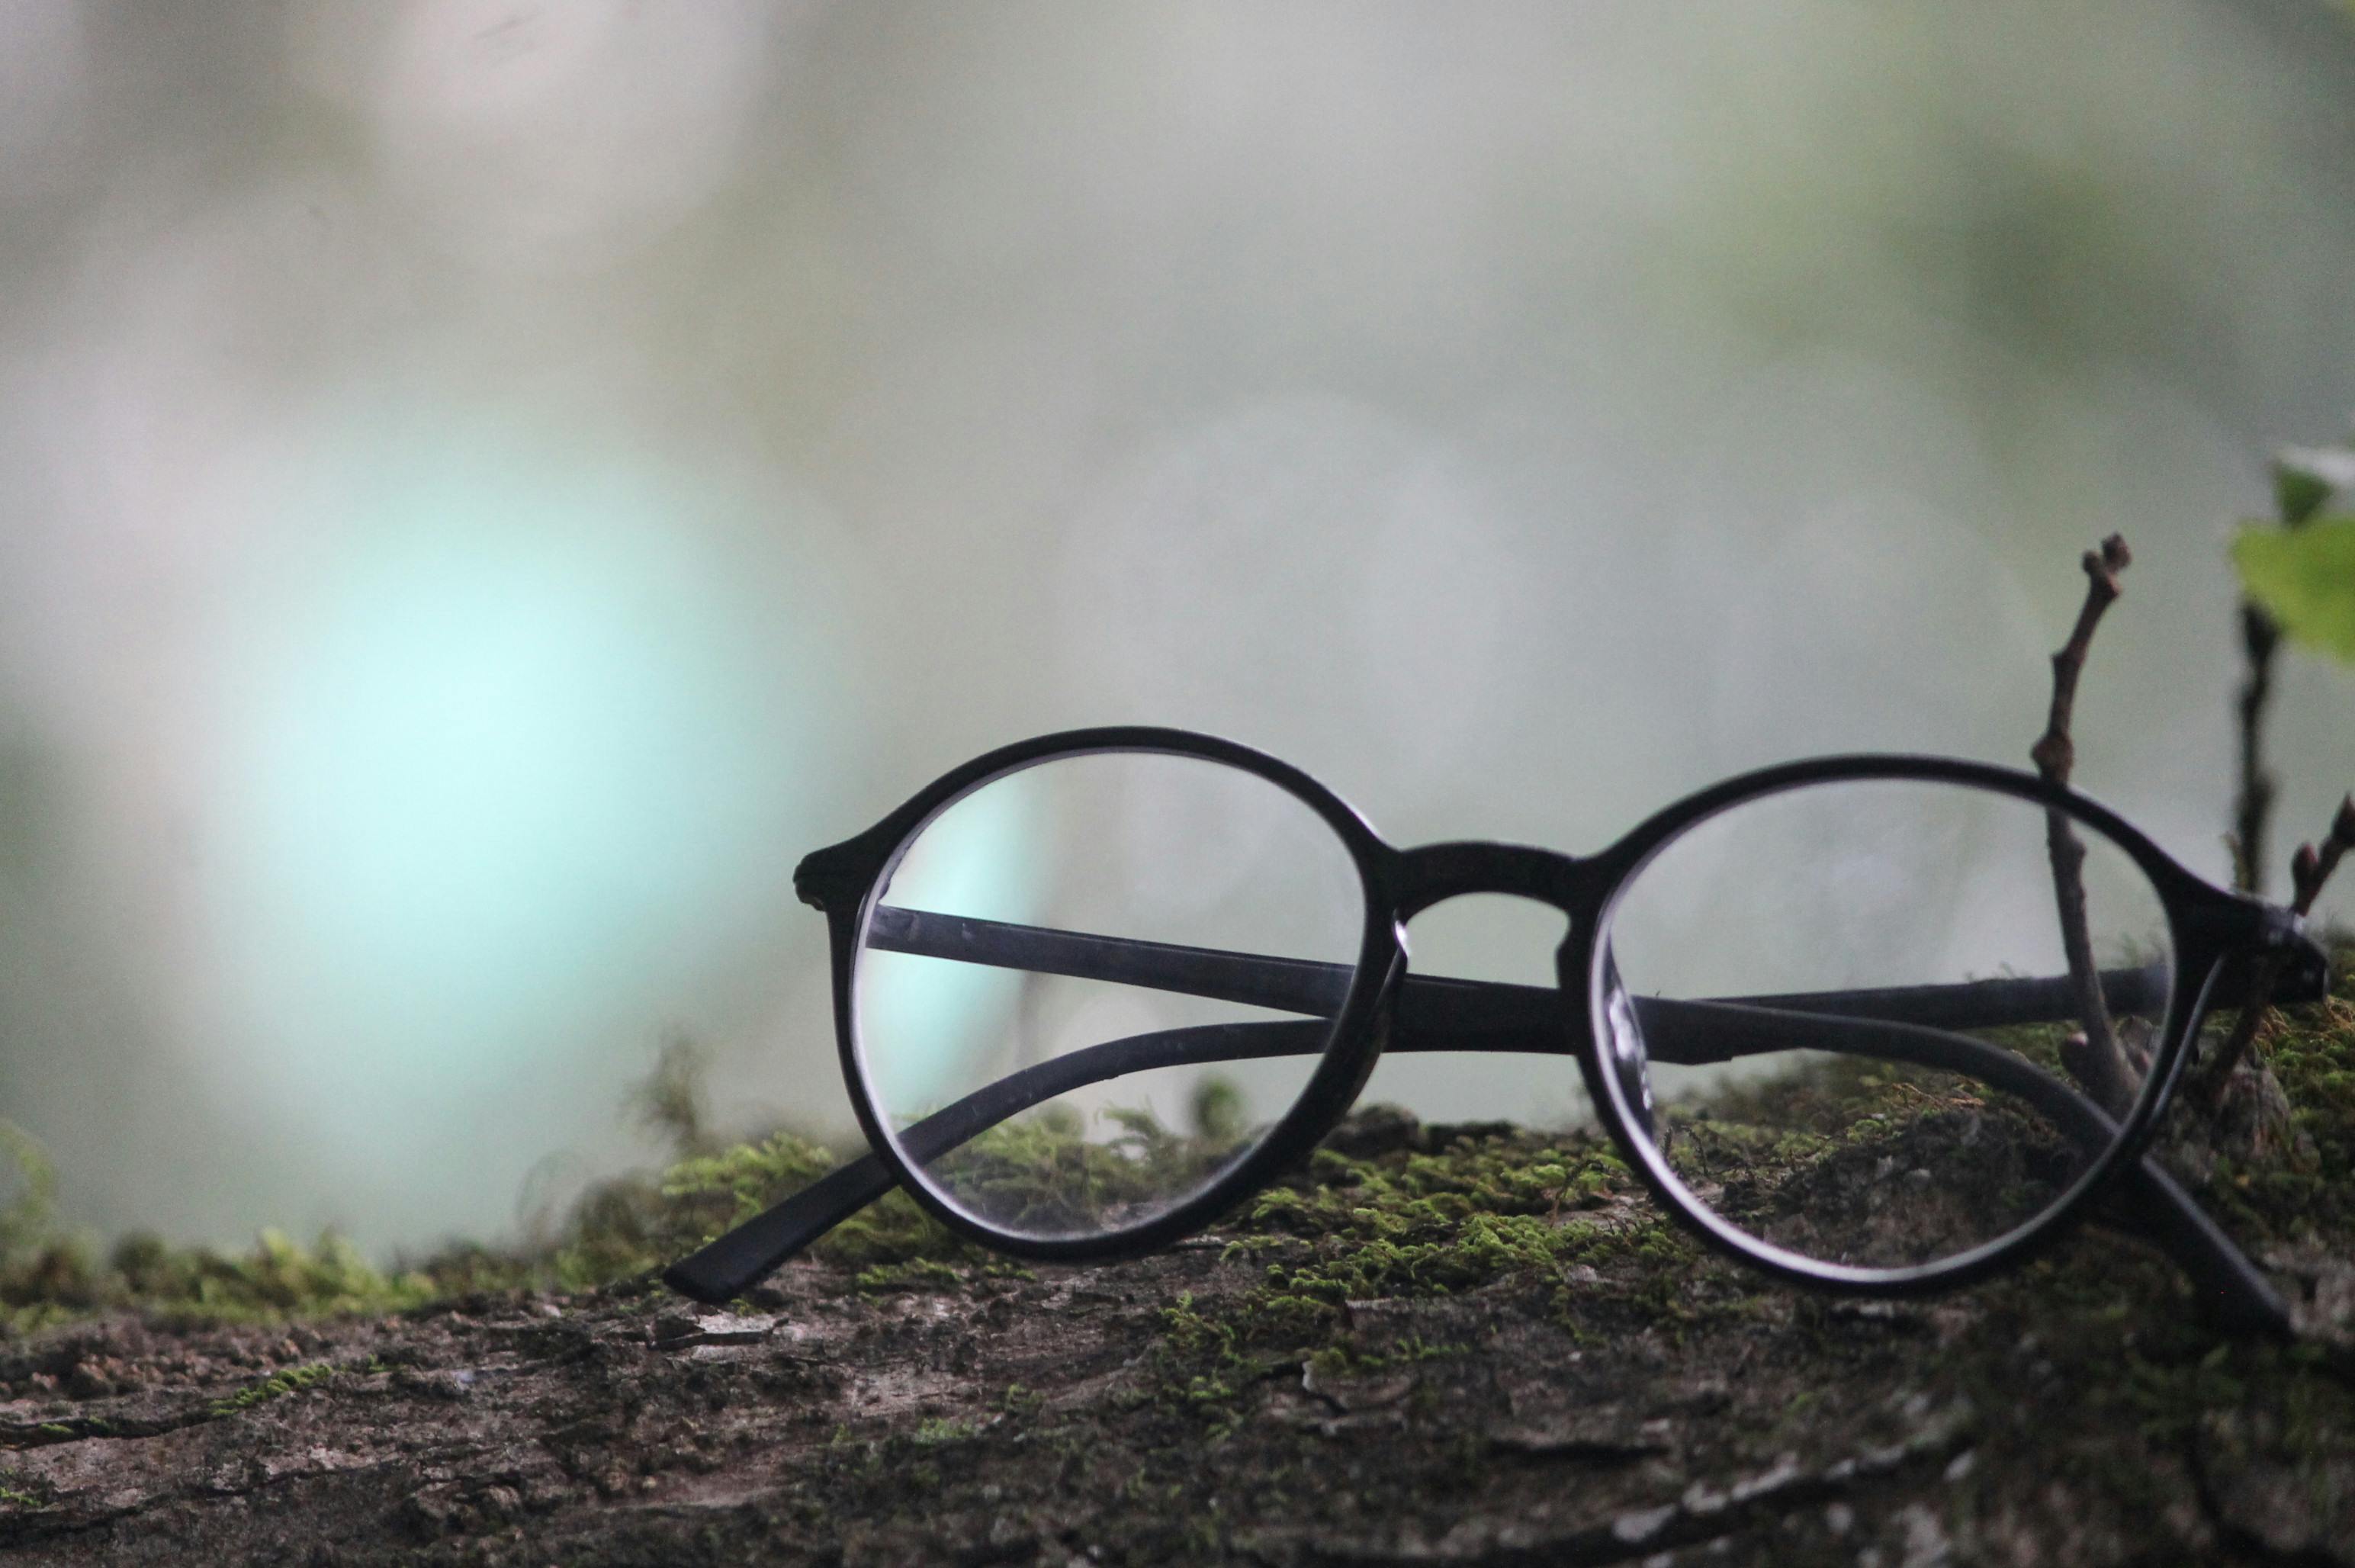 Free stock photo of eye glasses